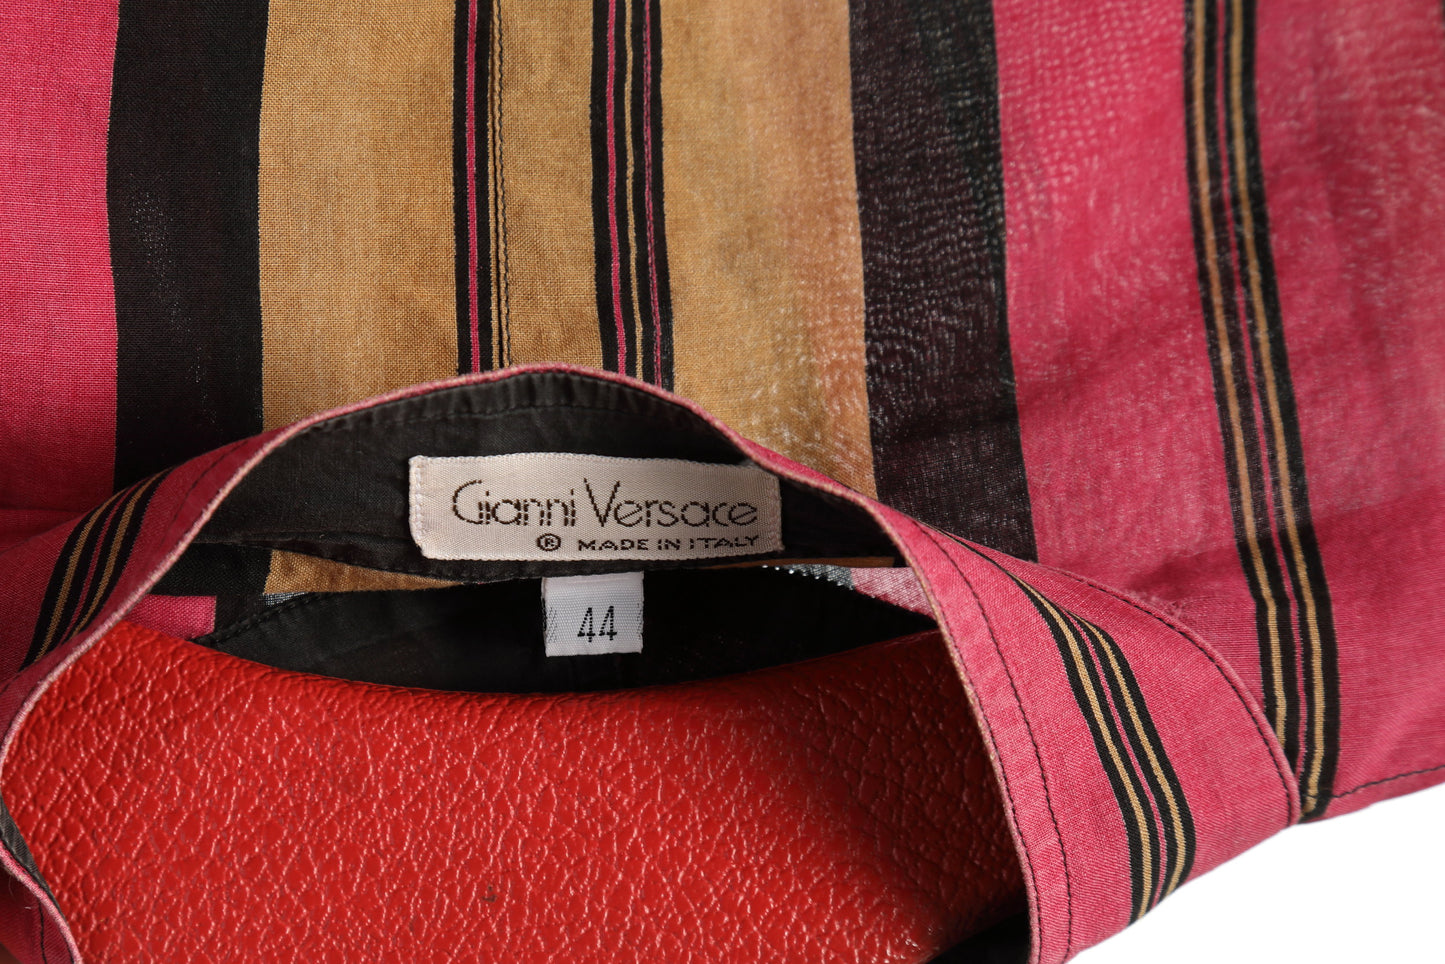 Gianni Versace 80s shirt